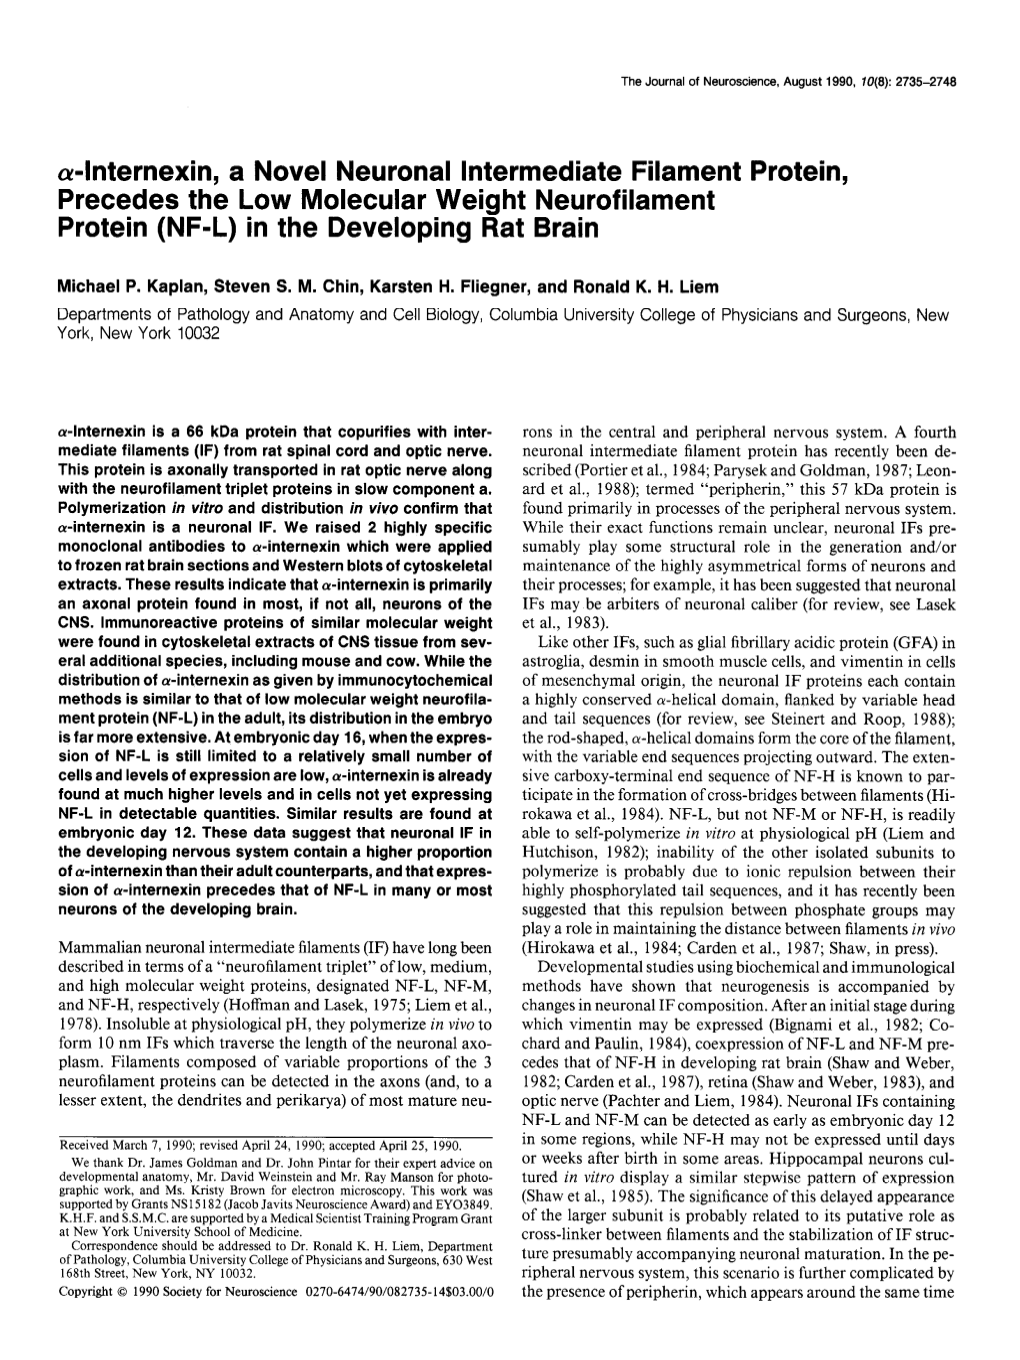 Dnternexin, a Novel Neuronal Intermediate Filament Protein, Precedes the Low Molecular Weight Neurofilament Protein (NF-L) in the Developing Rat Brain